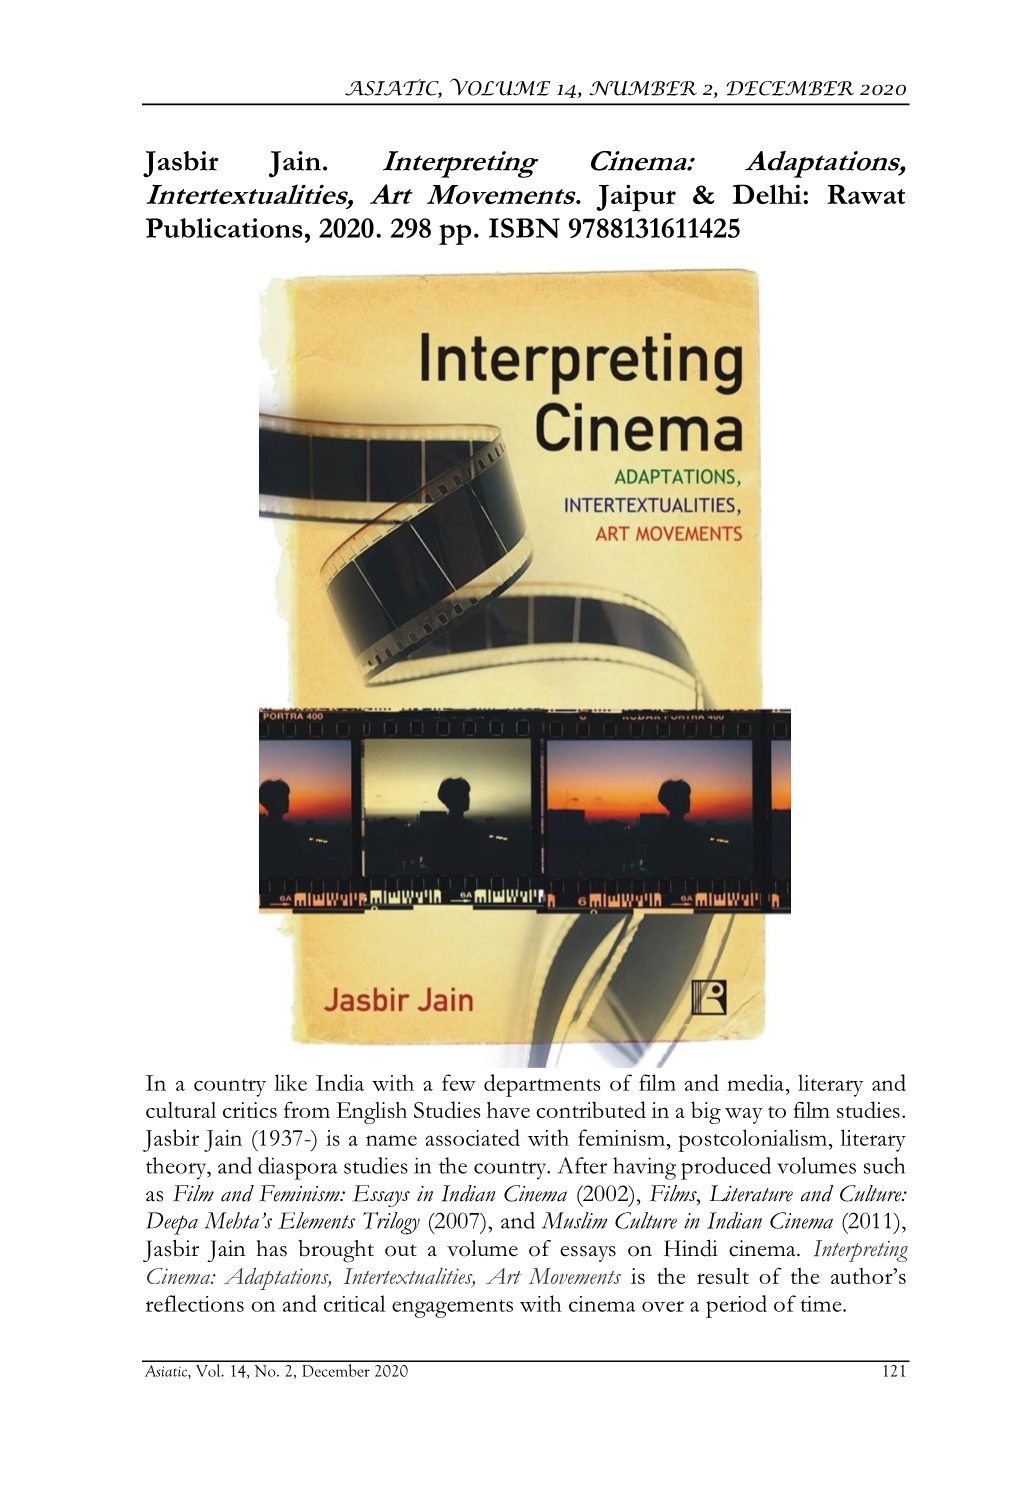 Interpreting Cinema: Adaptations, Intertextualities, Art Movements